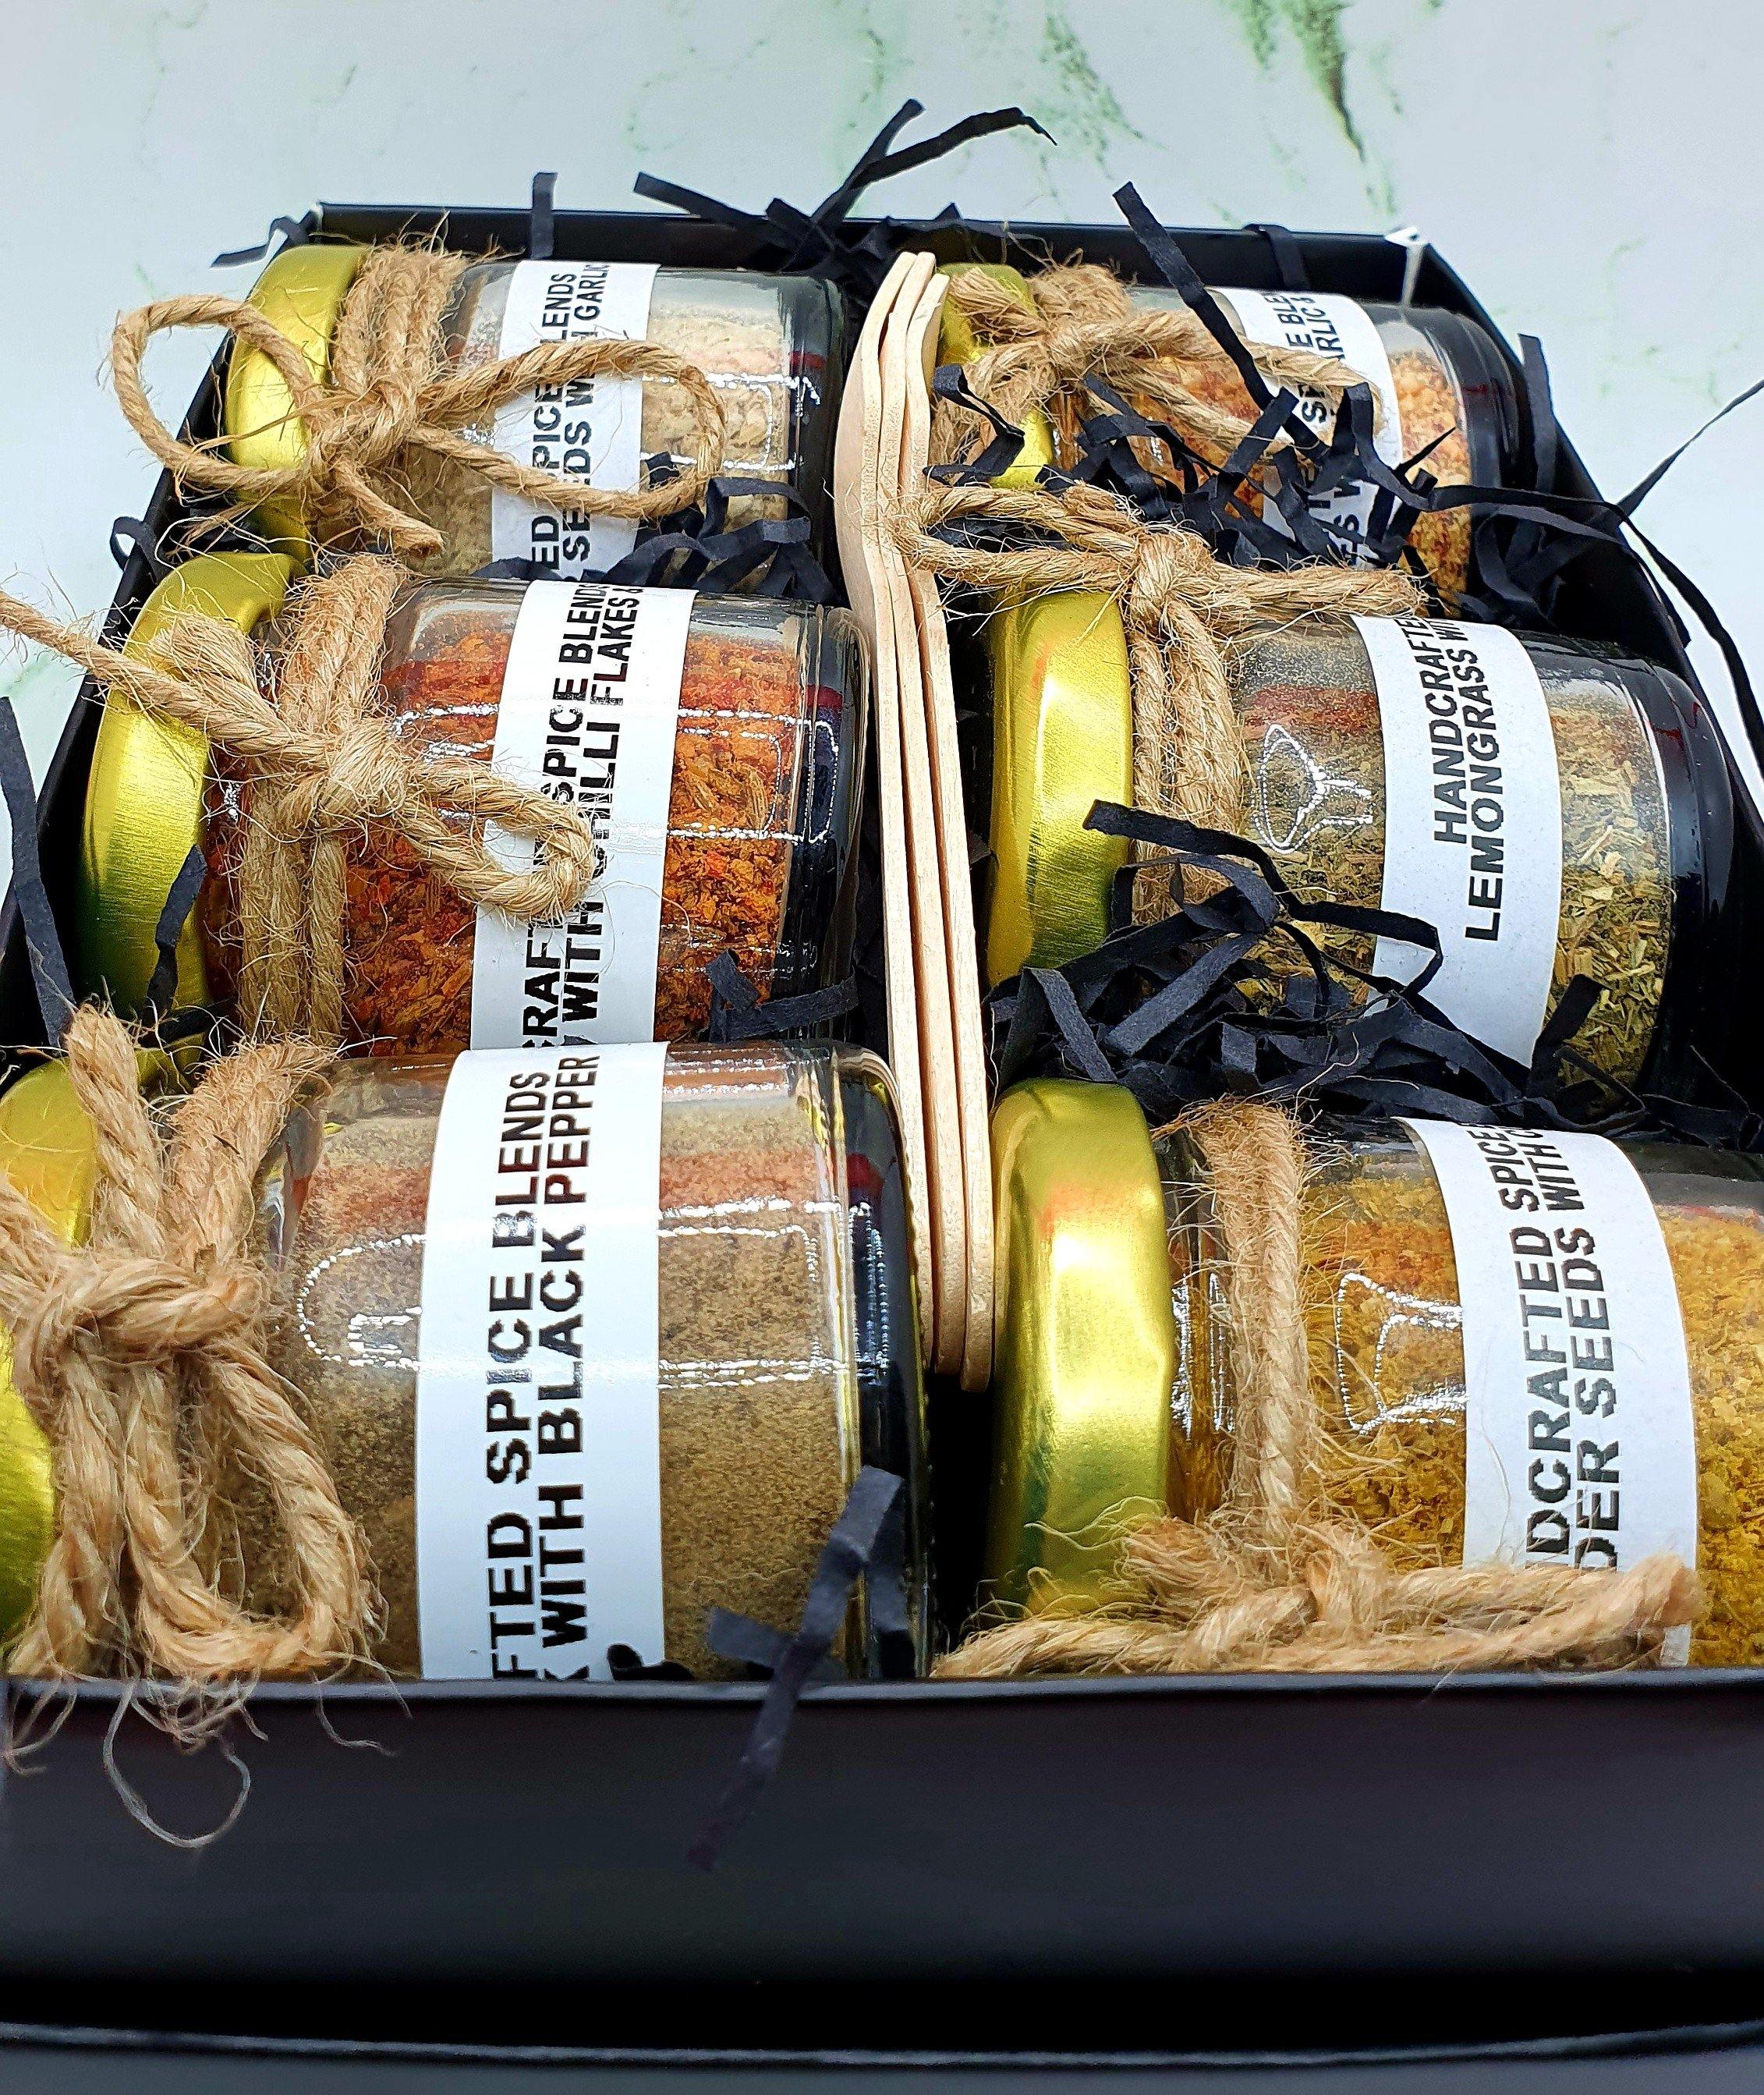 Herbs & Spice Starter Gift Sets, Manchester, UK